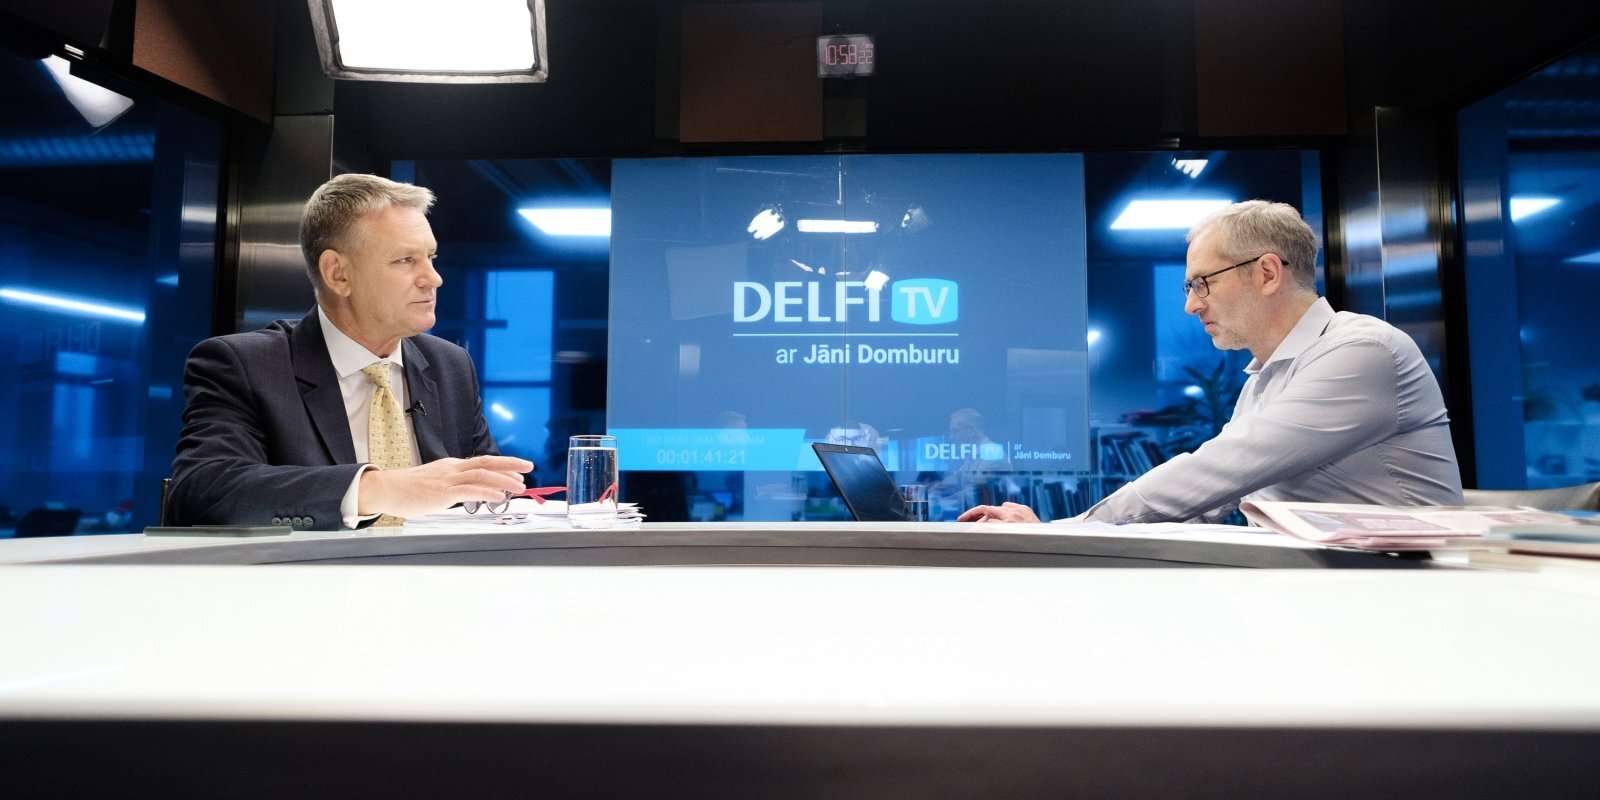 'Delfi TV ar Jāni Domburu' atbild Nauris Puntulis. Sarunas teksts